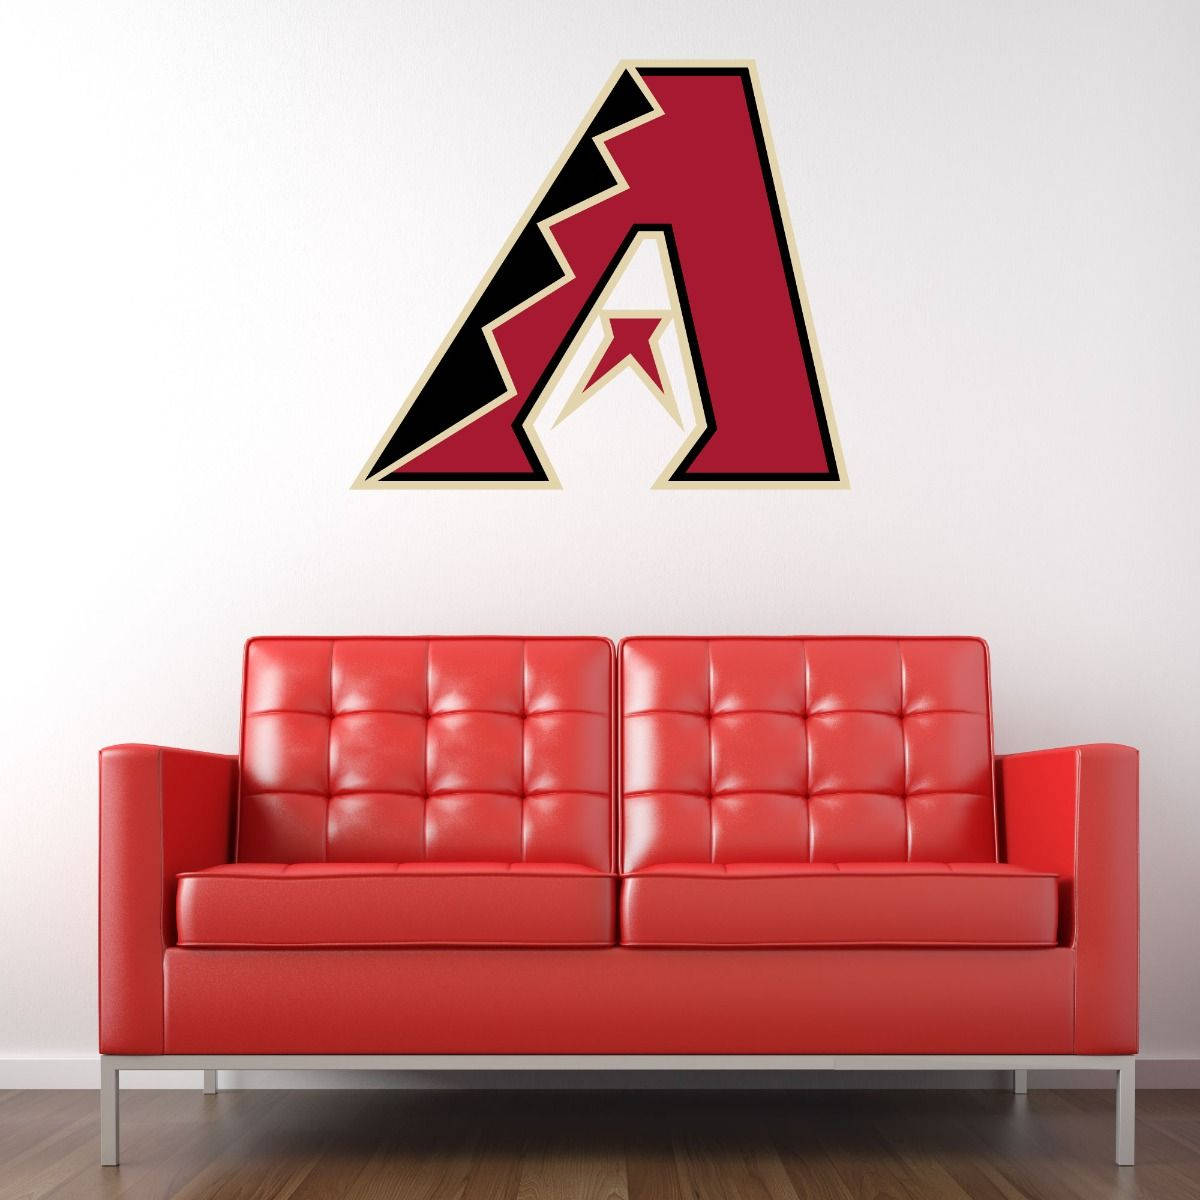 Arizona Diamondbacks With Red Sofa